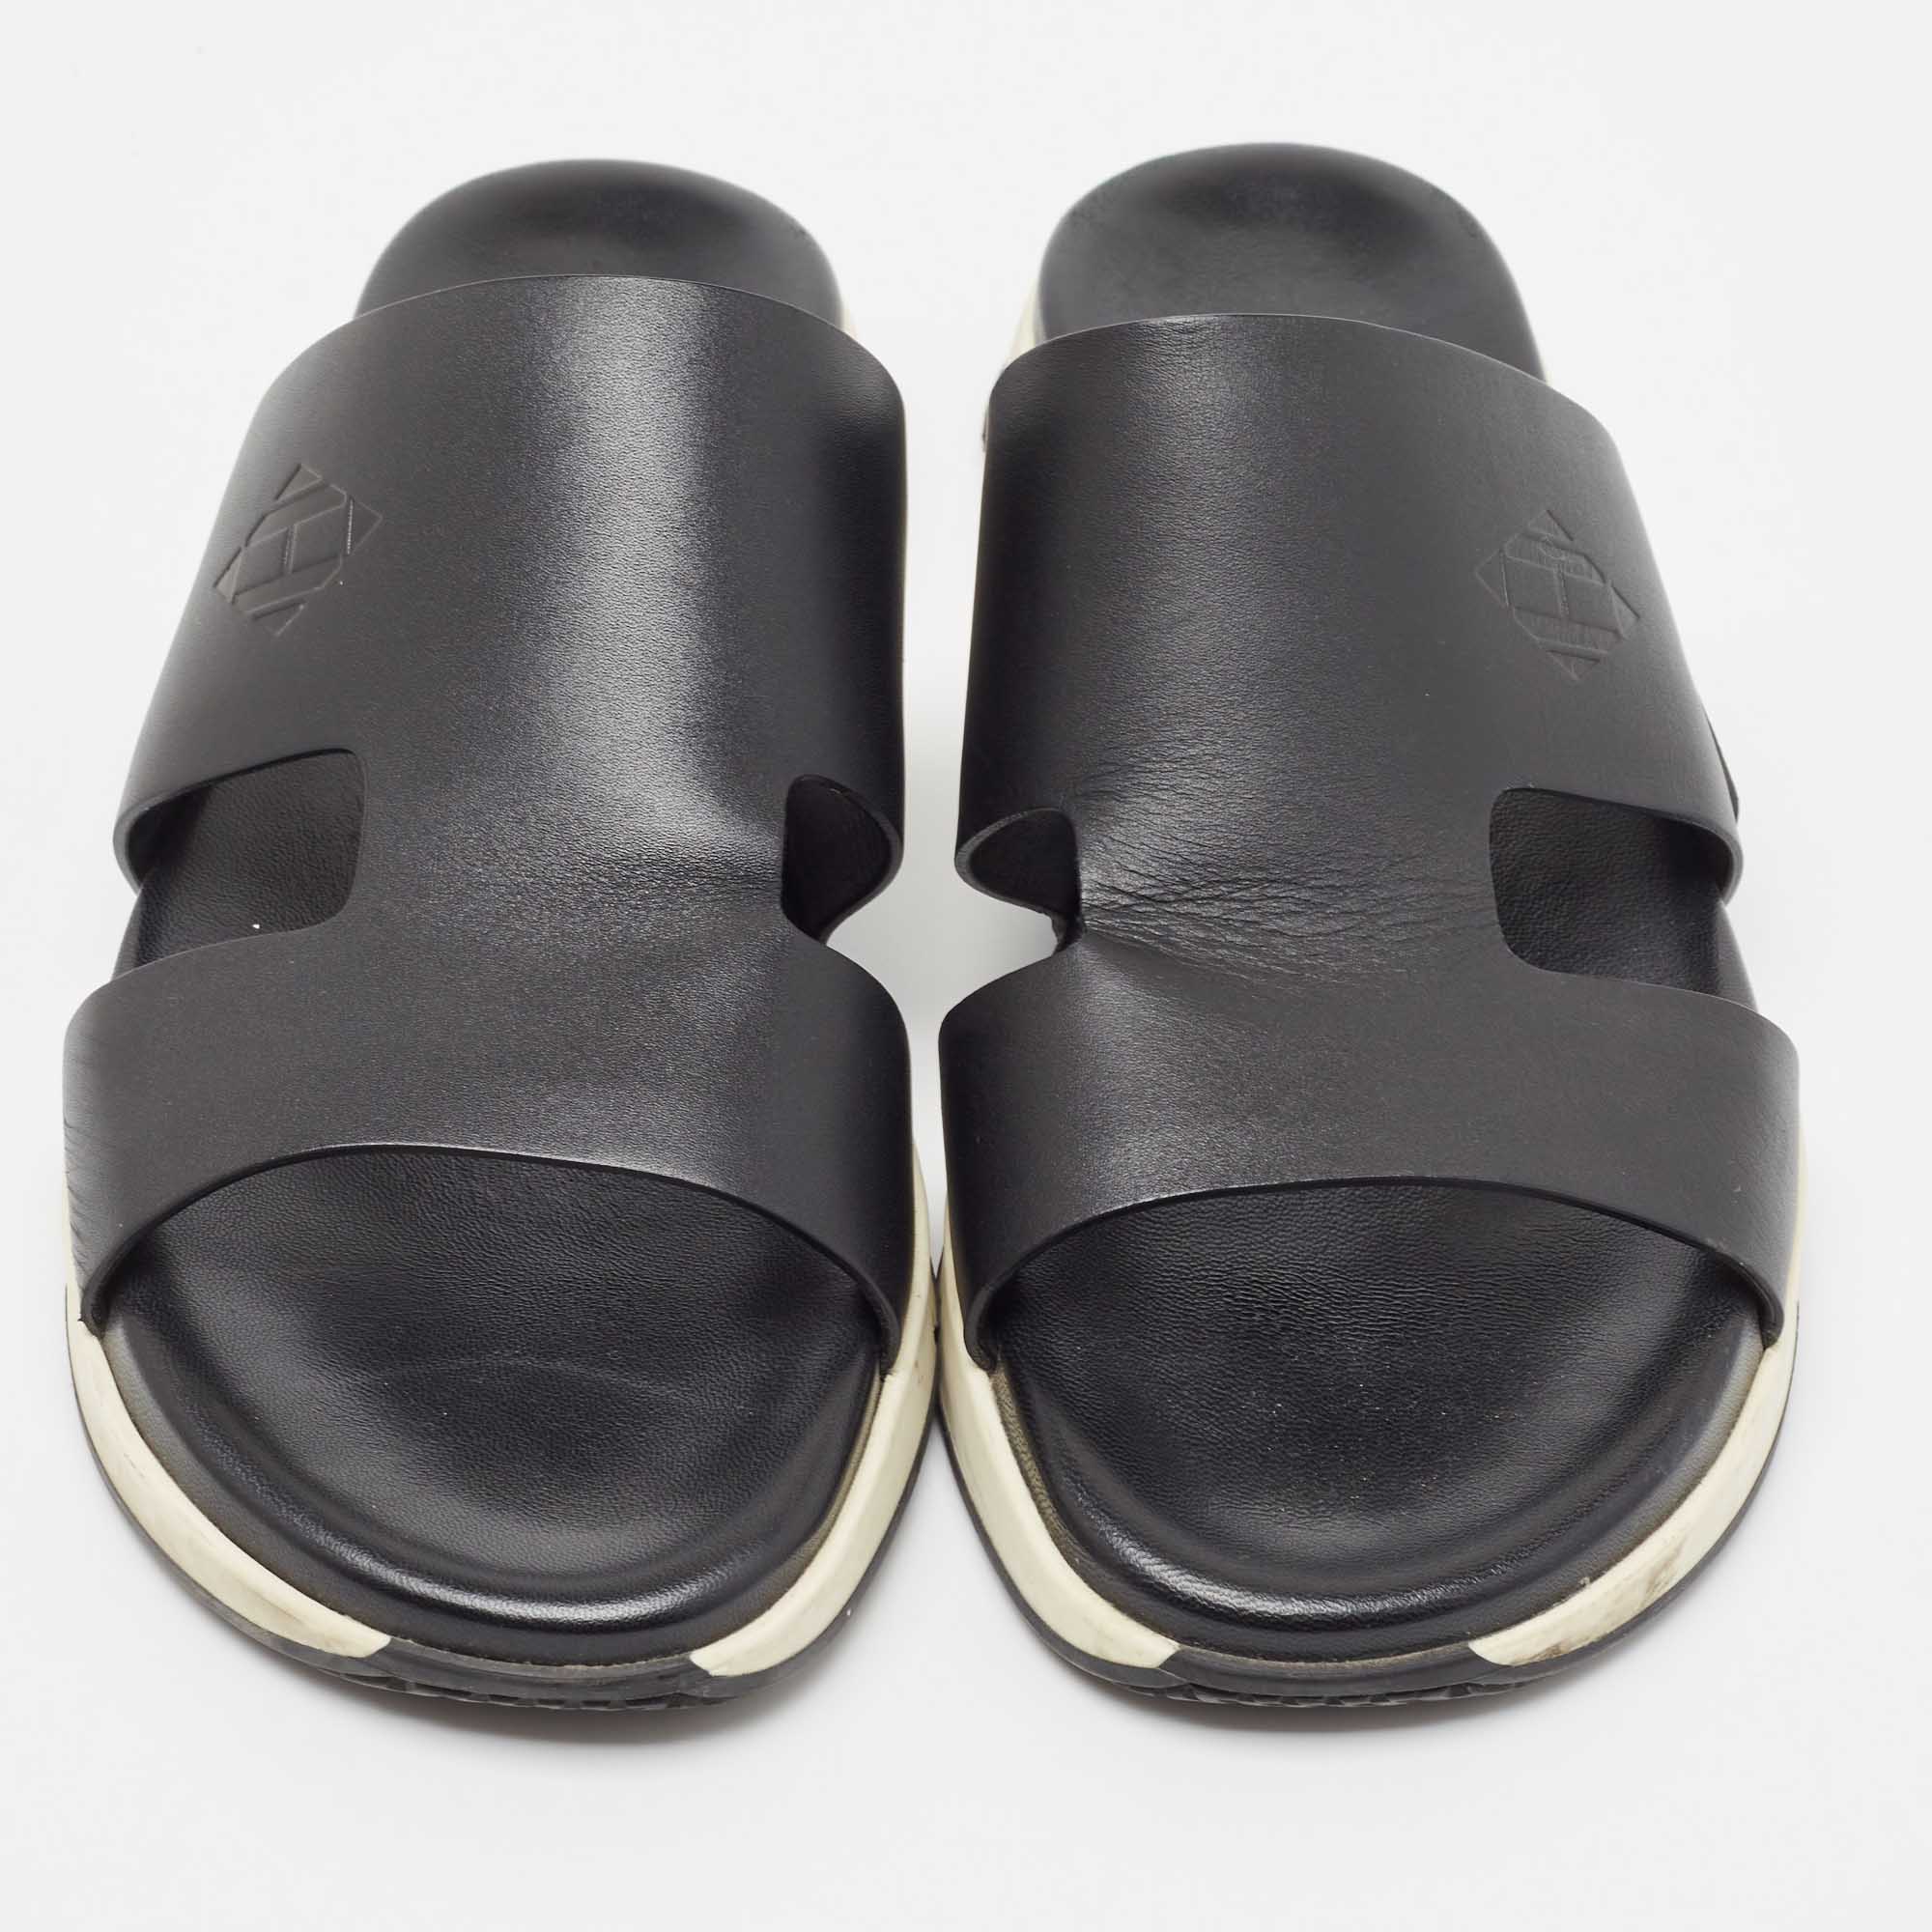 Hermes Black Leather Varadero Sandals Size 43